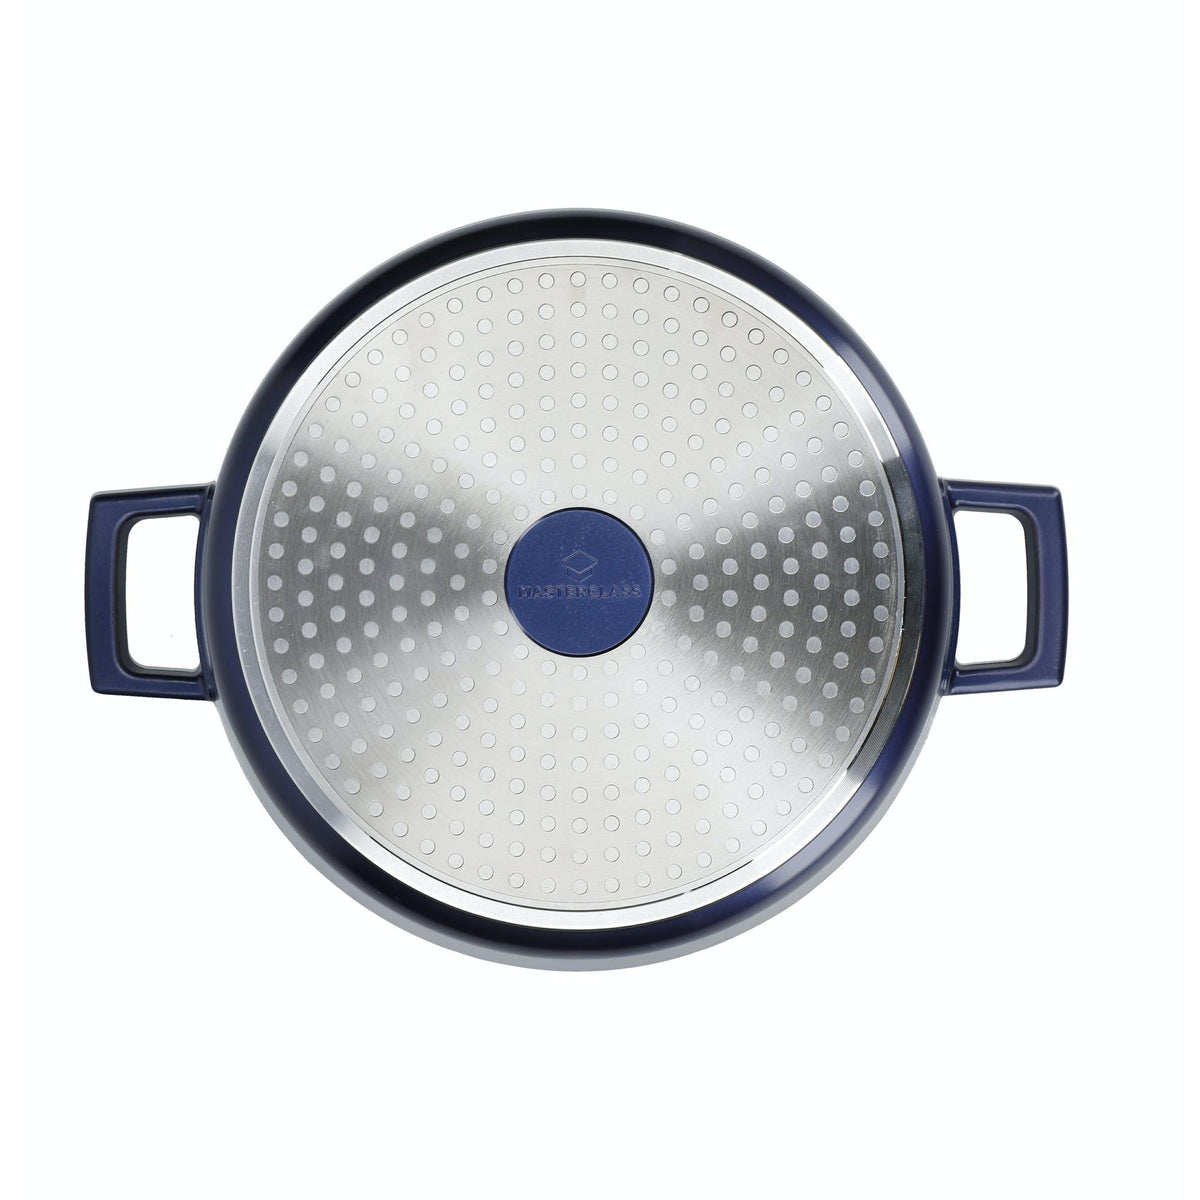 Metallic Blue Casserole Dish With Lid - Shallow 4 Litre - BESPOKE77